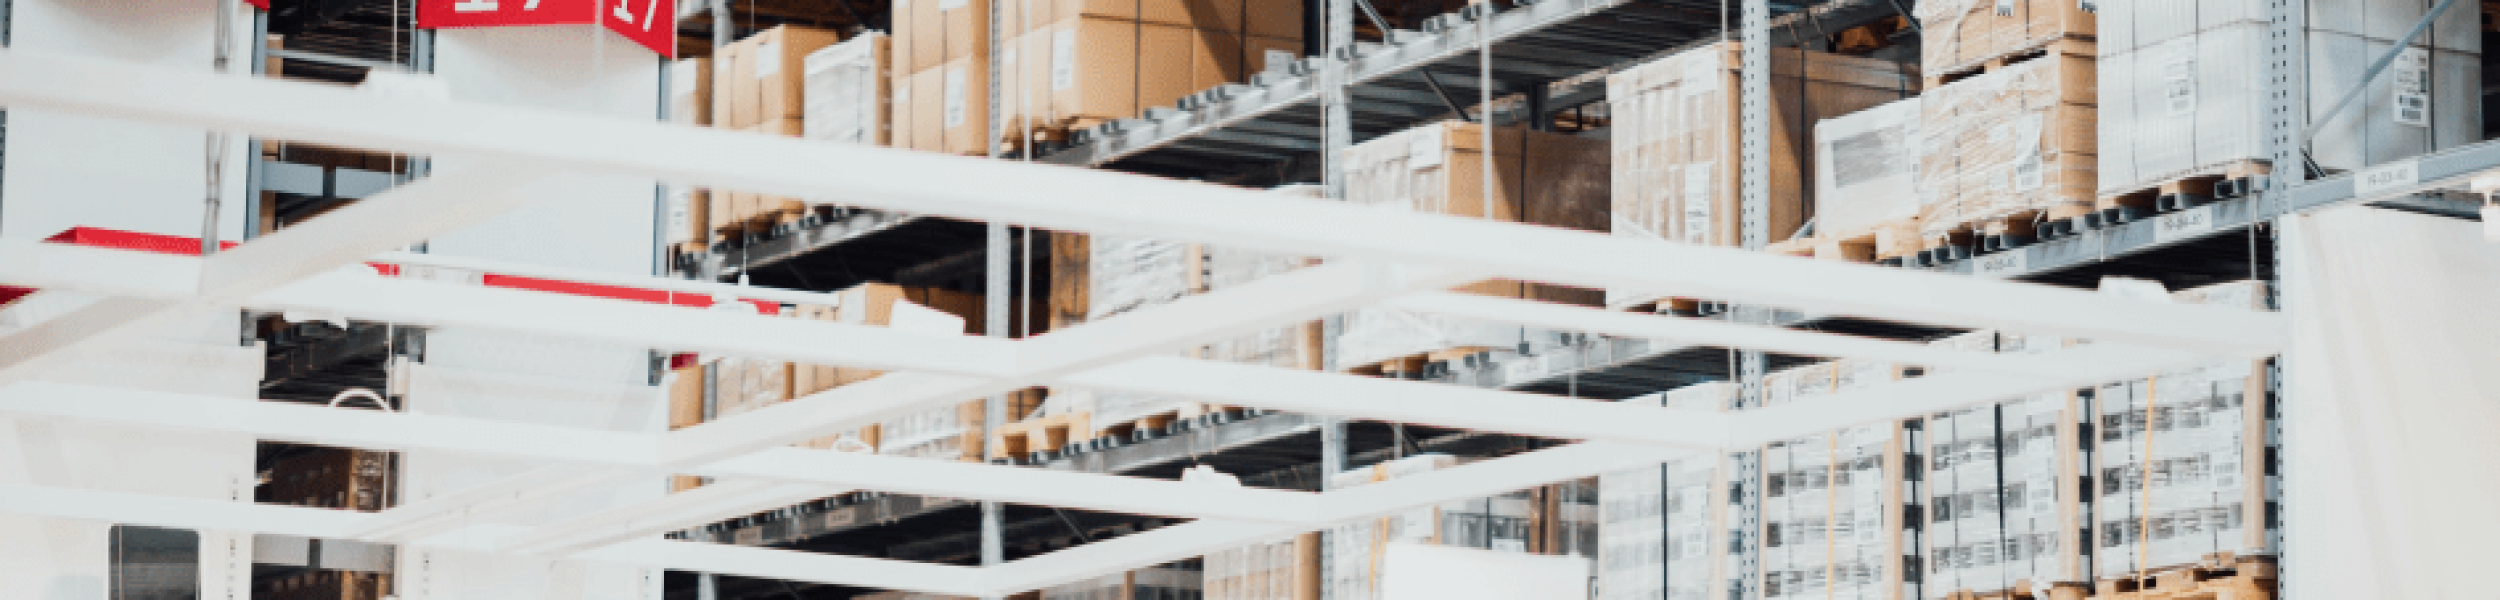 Warehouse space optimization: KPG Wholesale case study